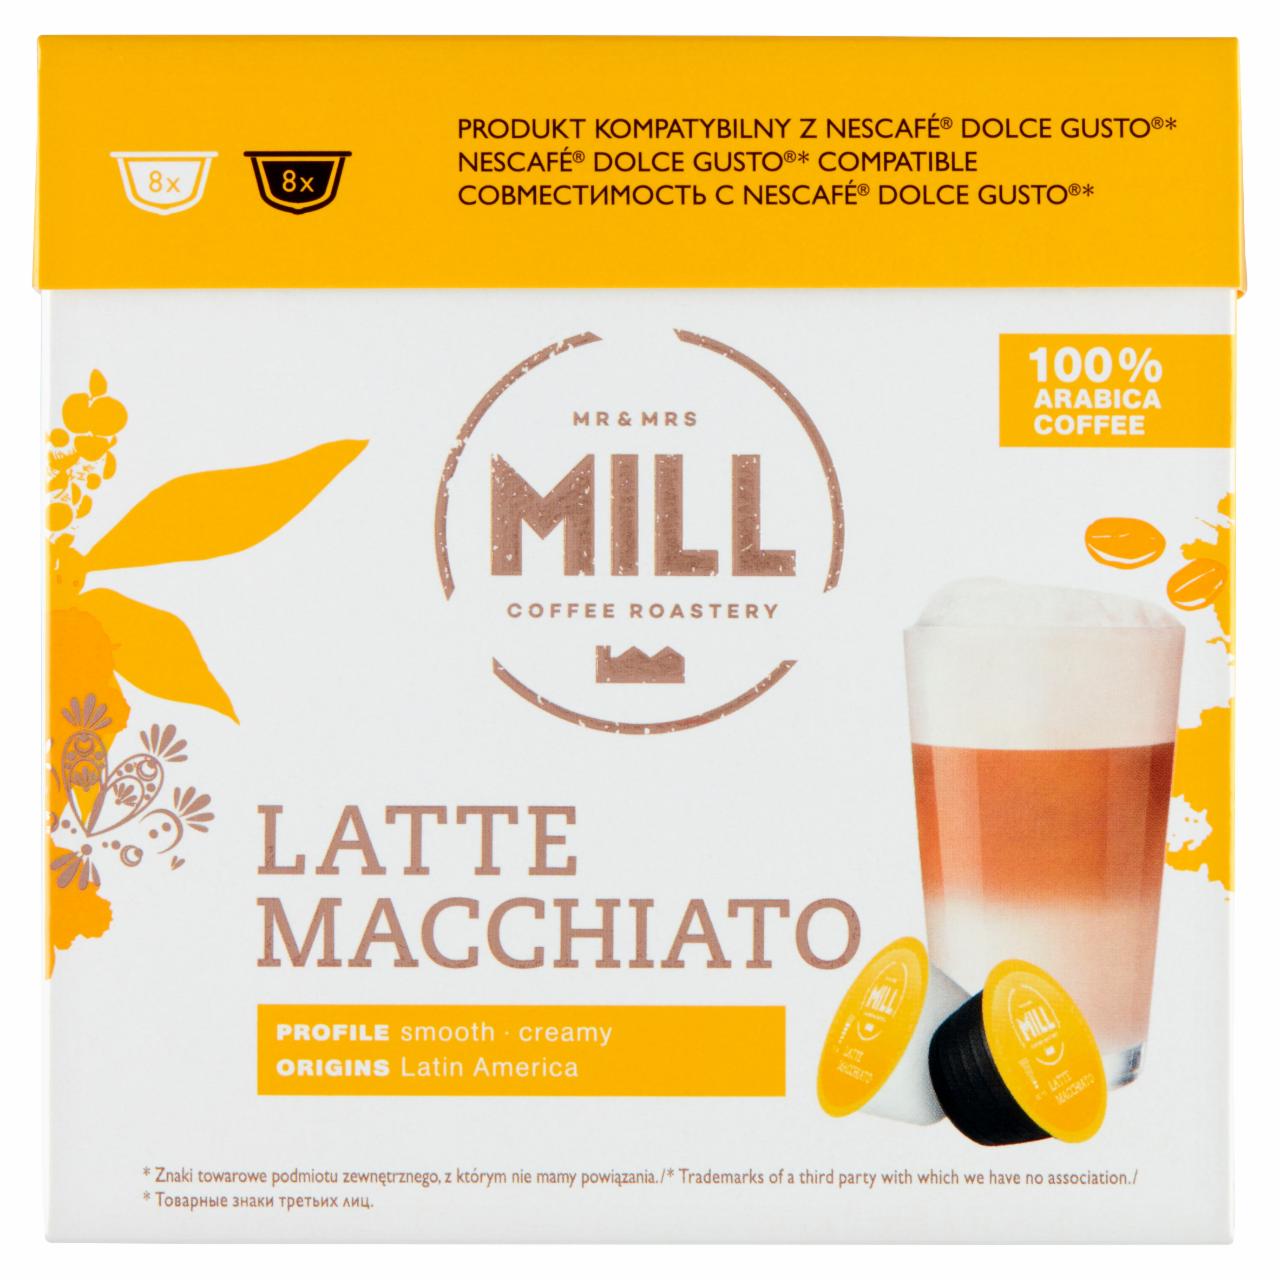 Zdjęcia - Mr & Mrs Mill Latte Macchiato Kawa w kapsułkach 193,6 g (8 x 17,8 g i 8 x 6,4 g)